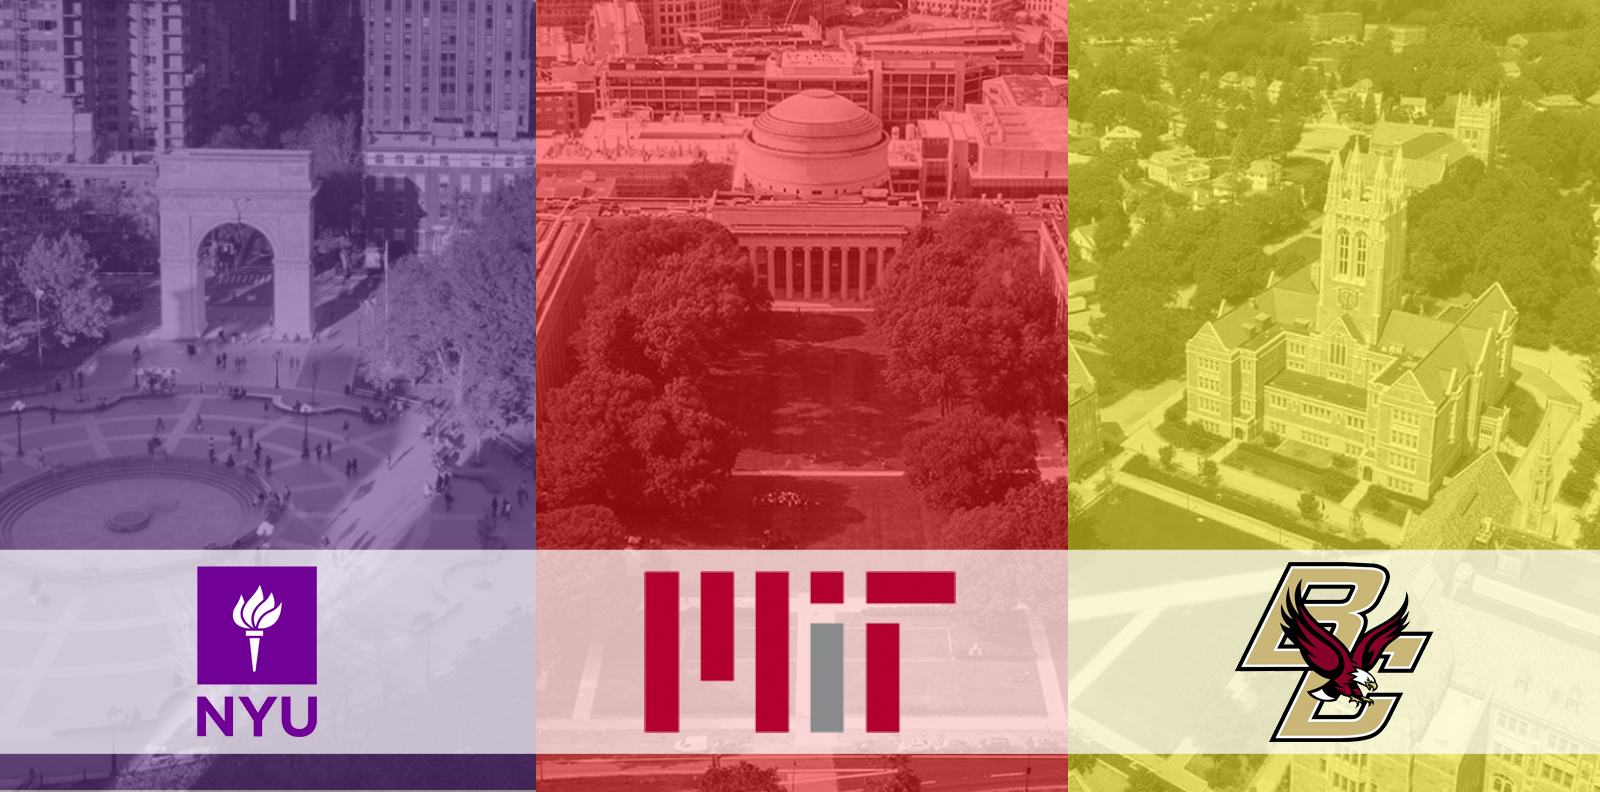 NYU, MIT, or BC?